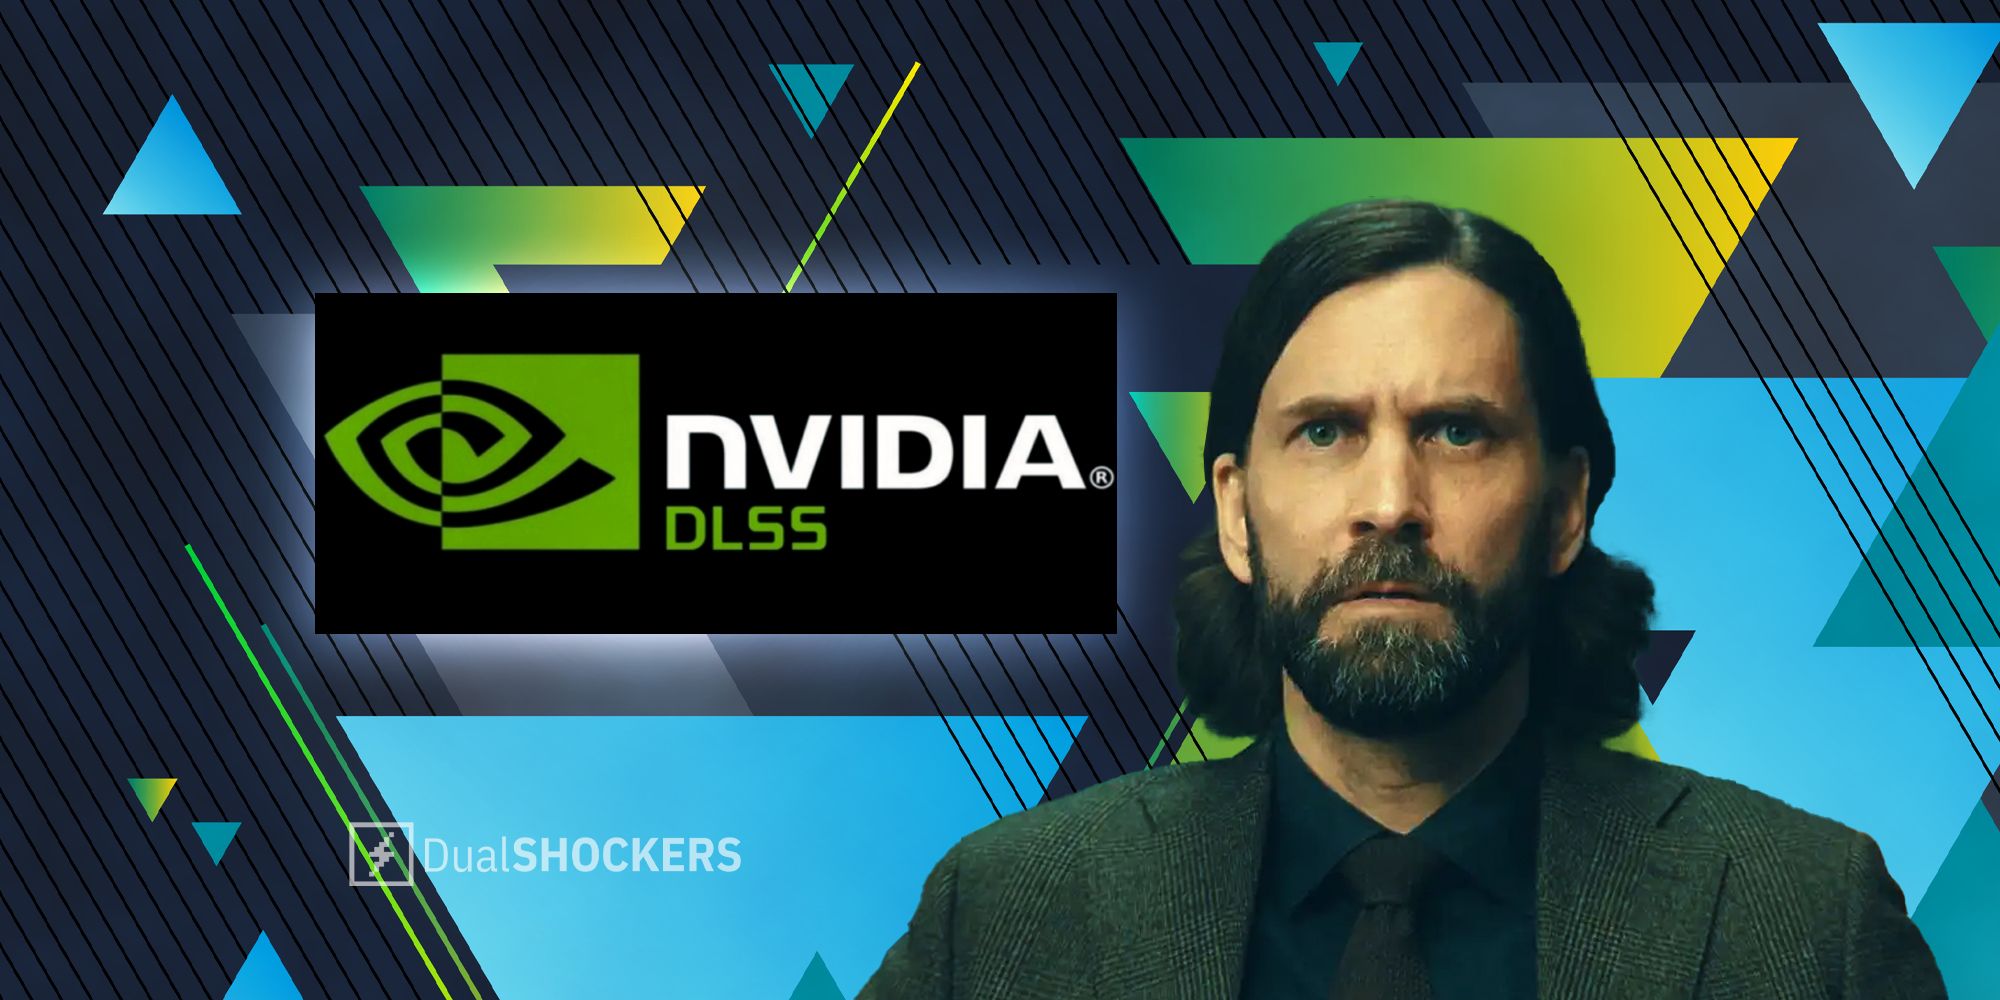 nvidia DLSS logo and Alan Wake 2